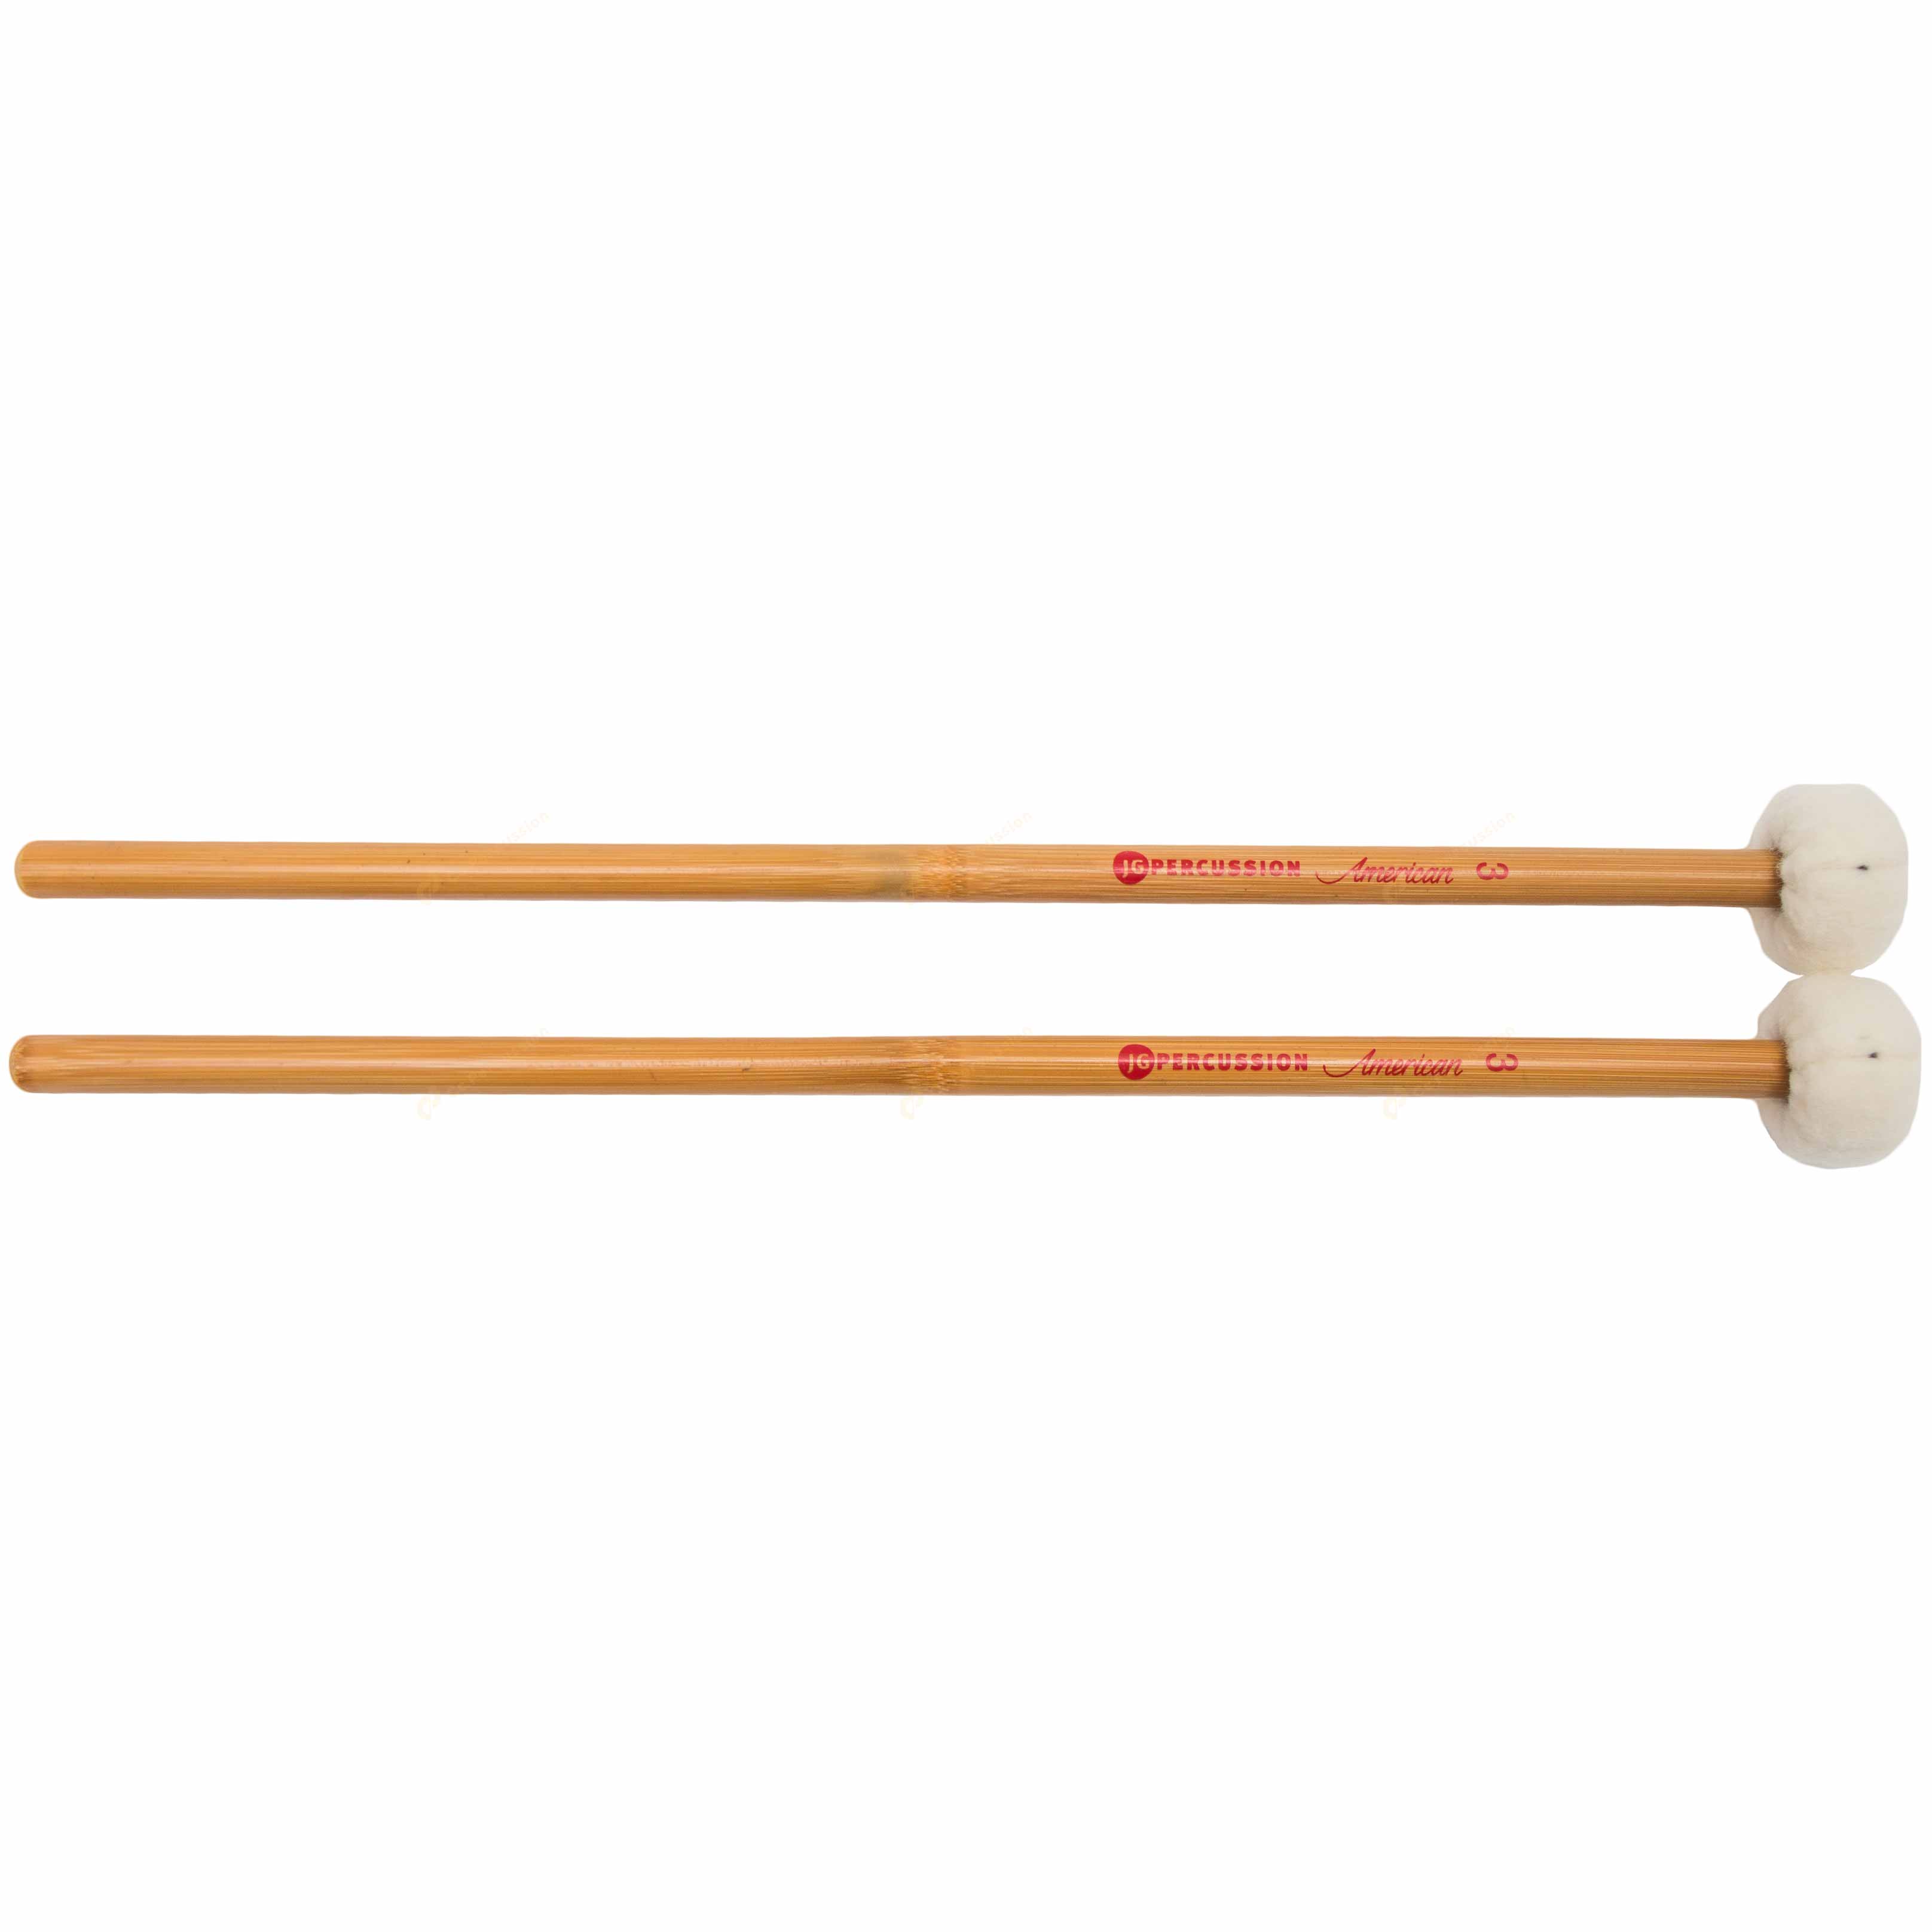 JGpercussion A3 竹製棒身 純手工 美國風格系列定音鼓棒